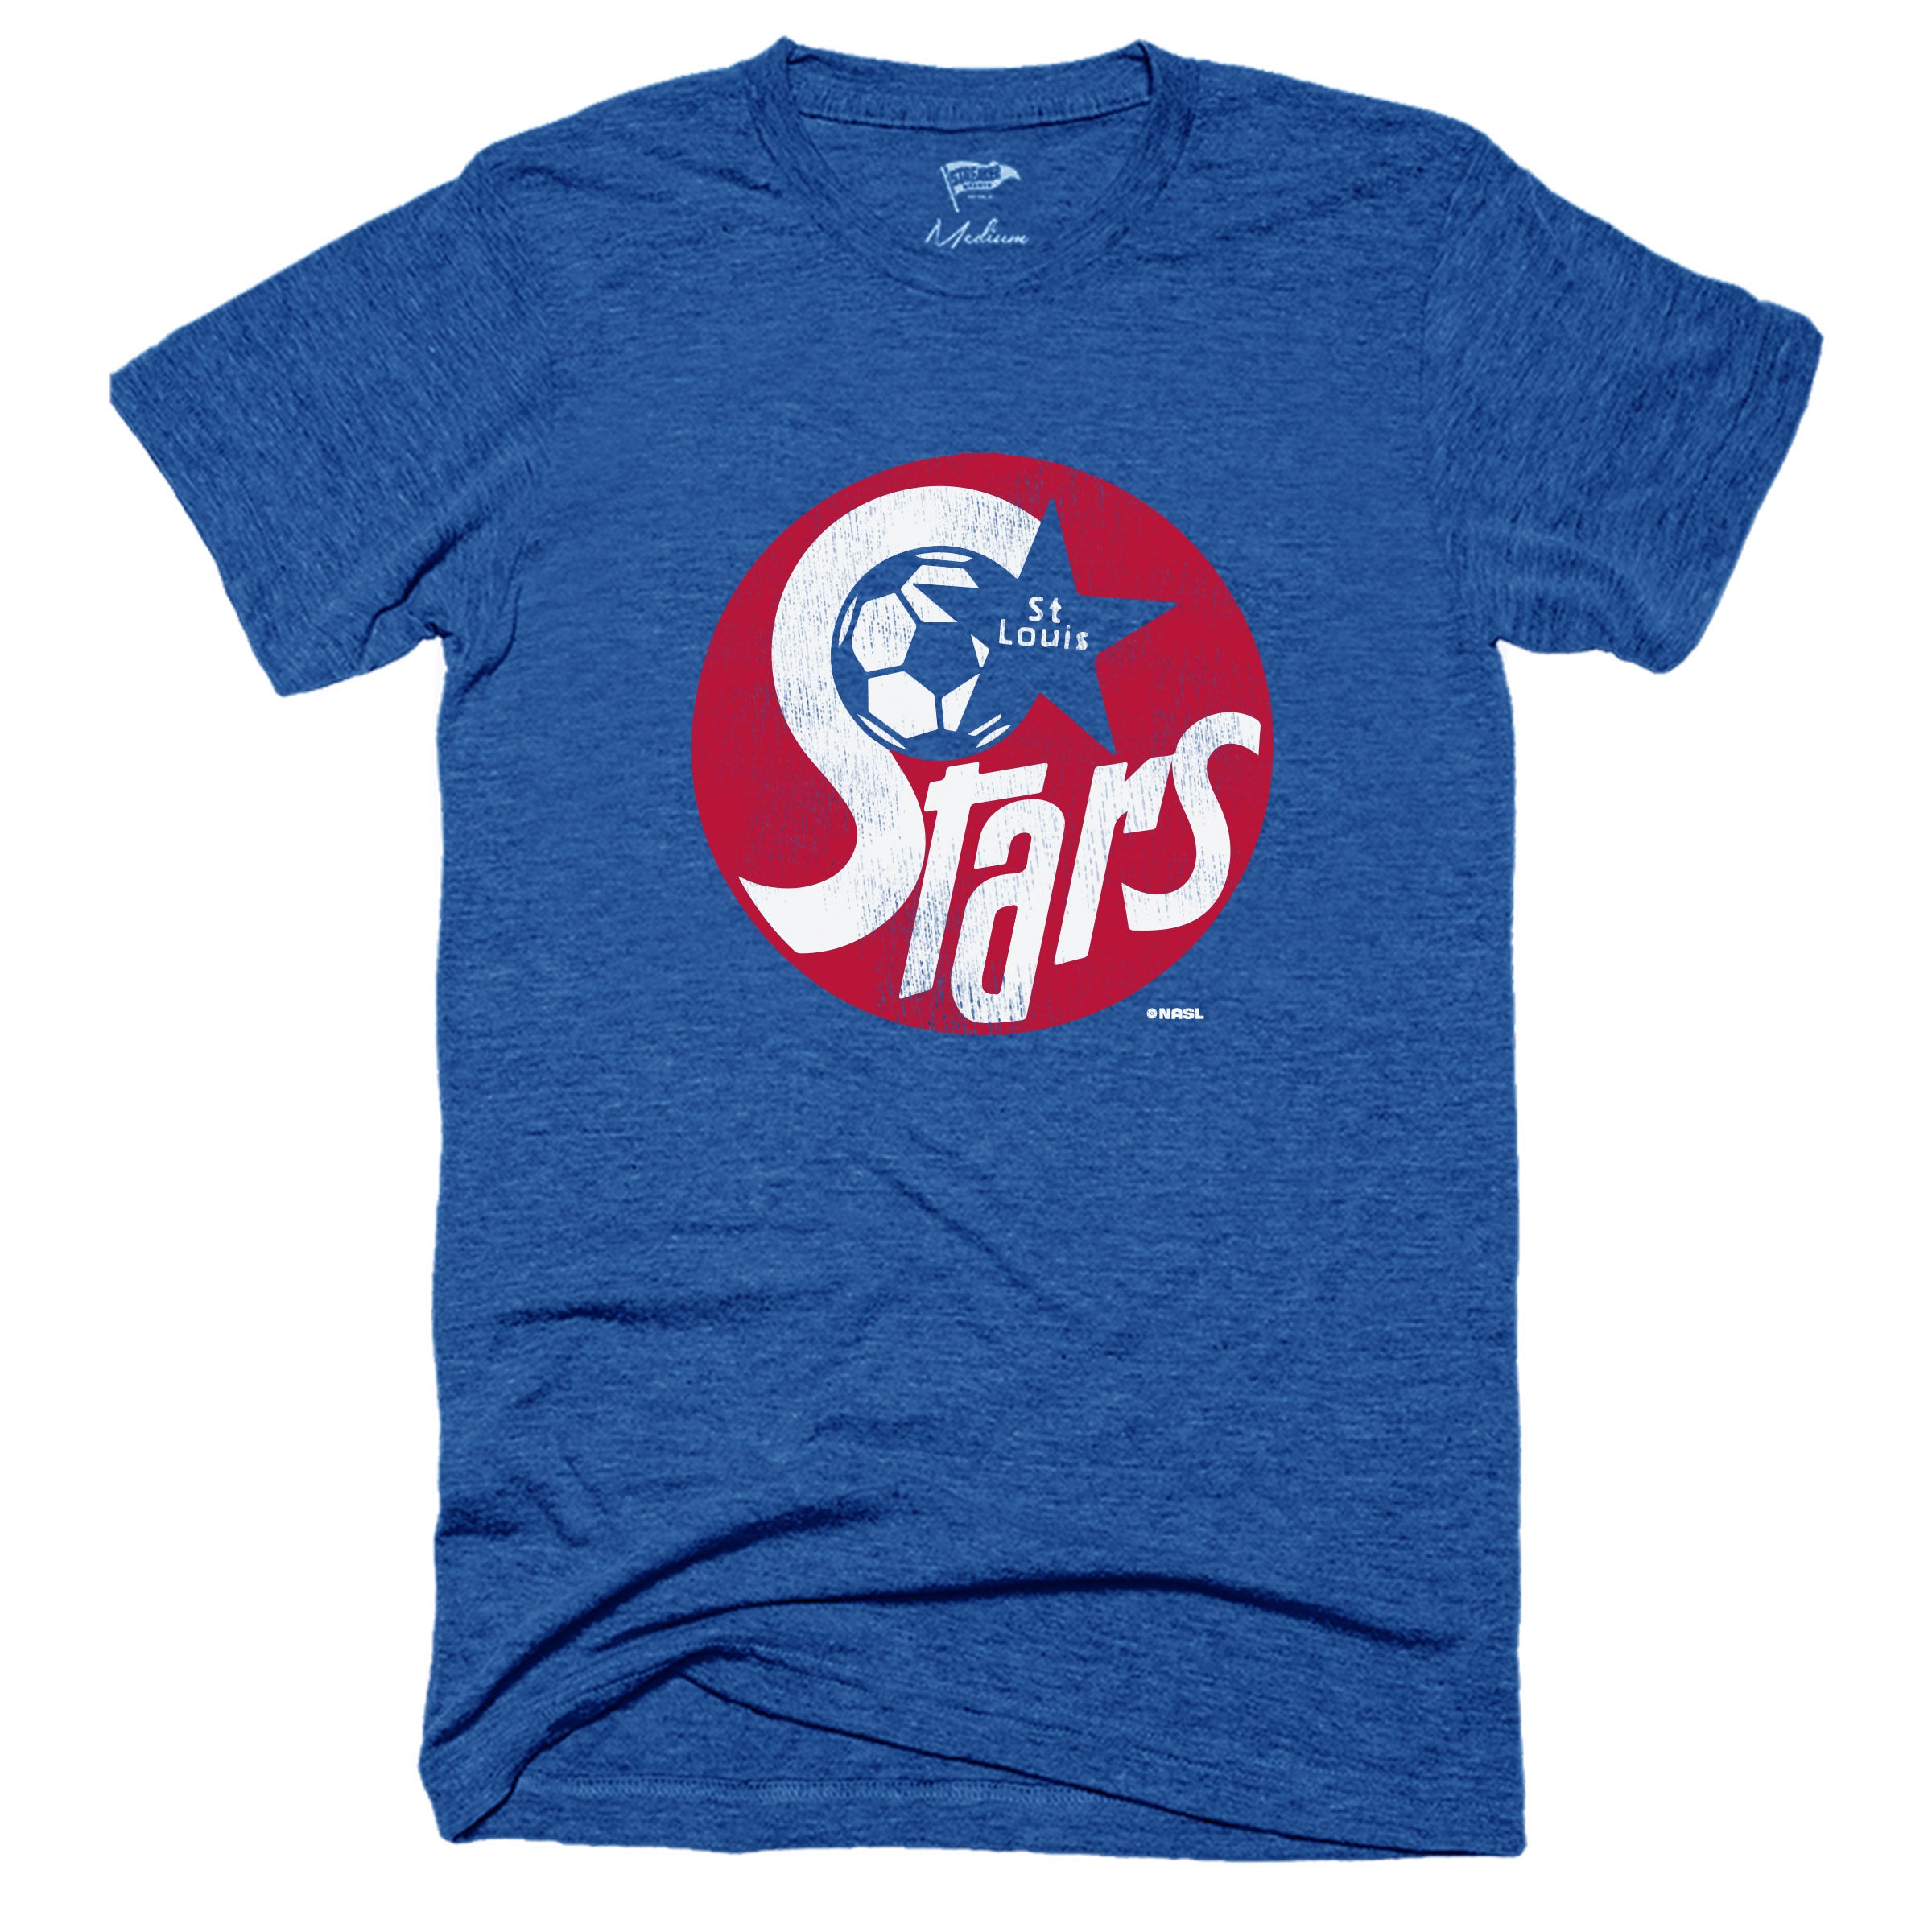 St. Louis Stars Soccer | Vintage Sports Apparel | Old School Shirts